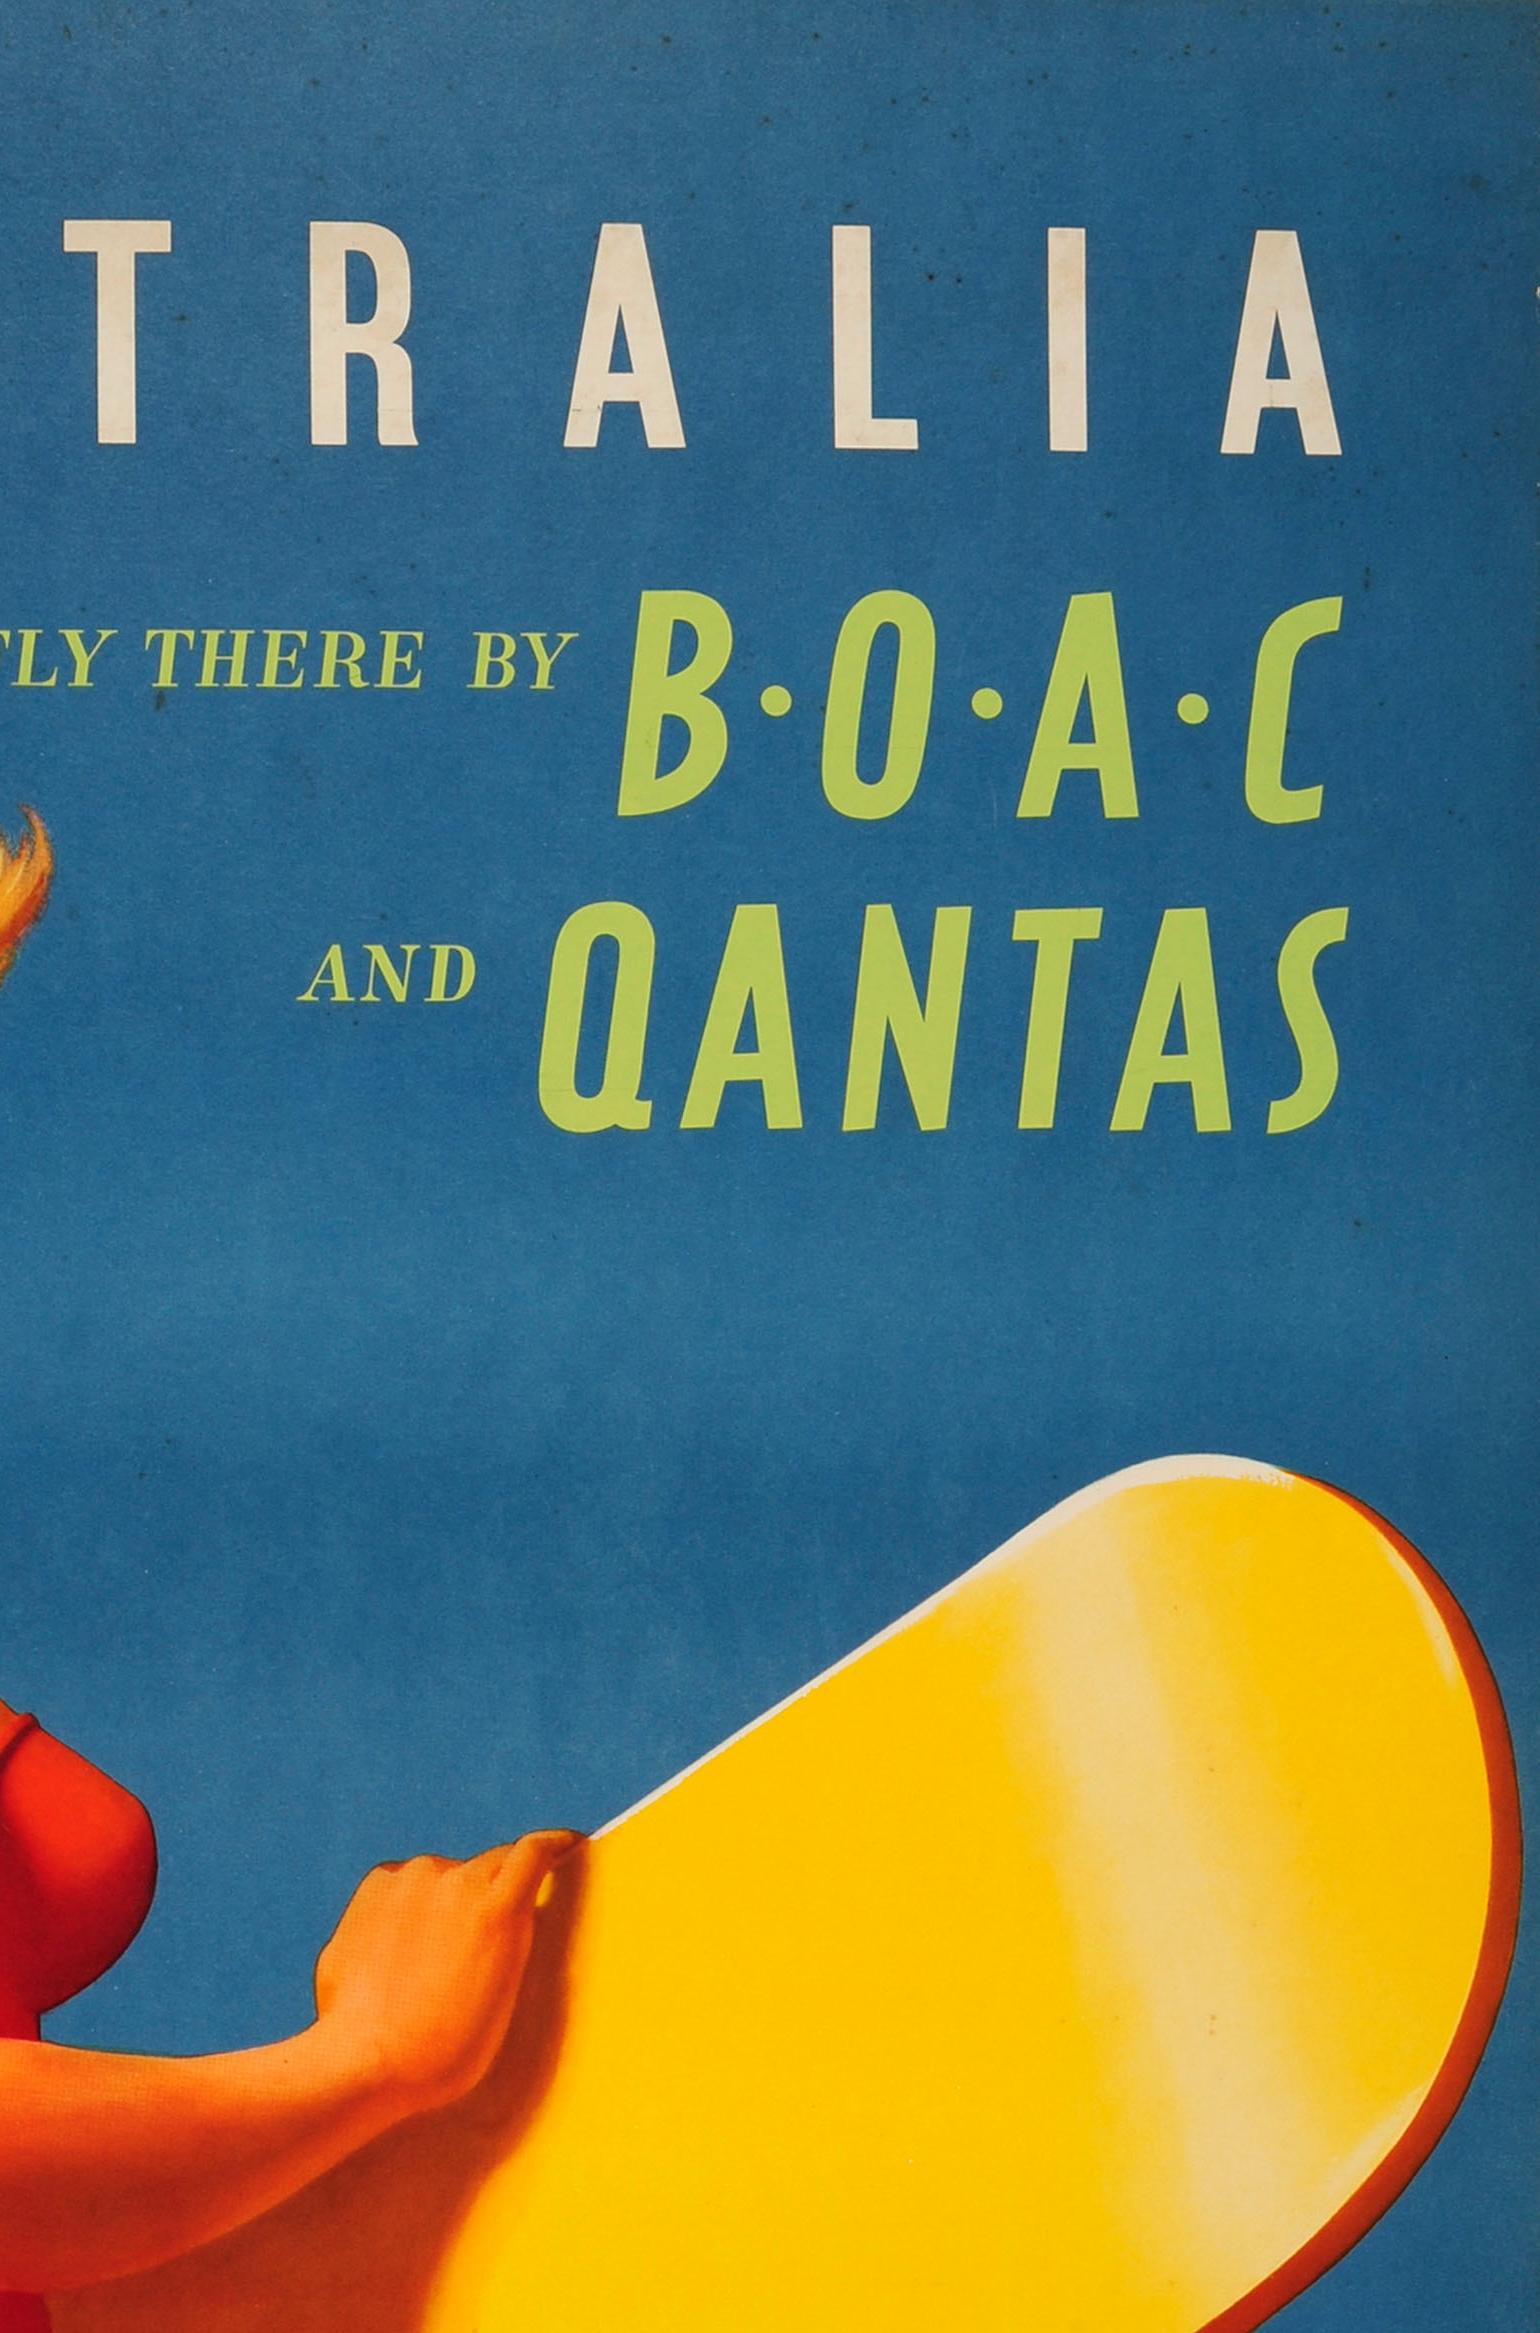 vintage qantas posters